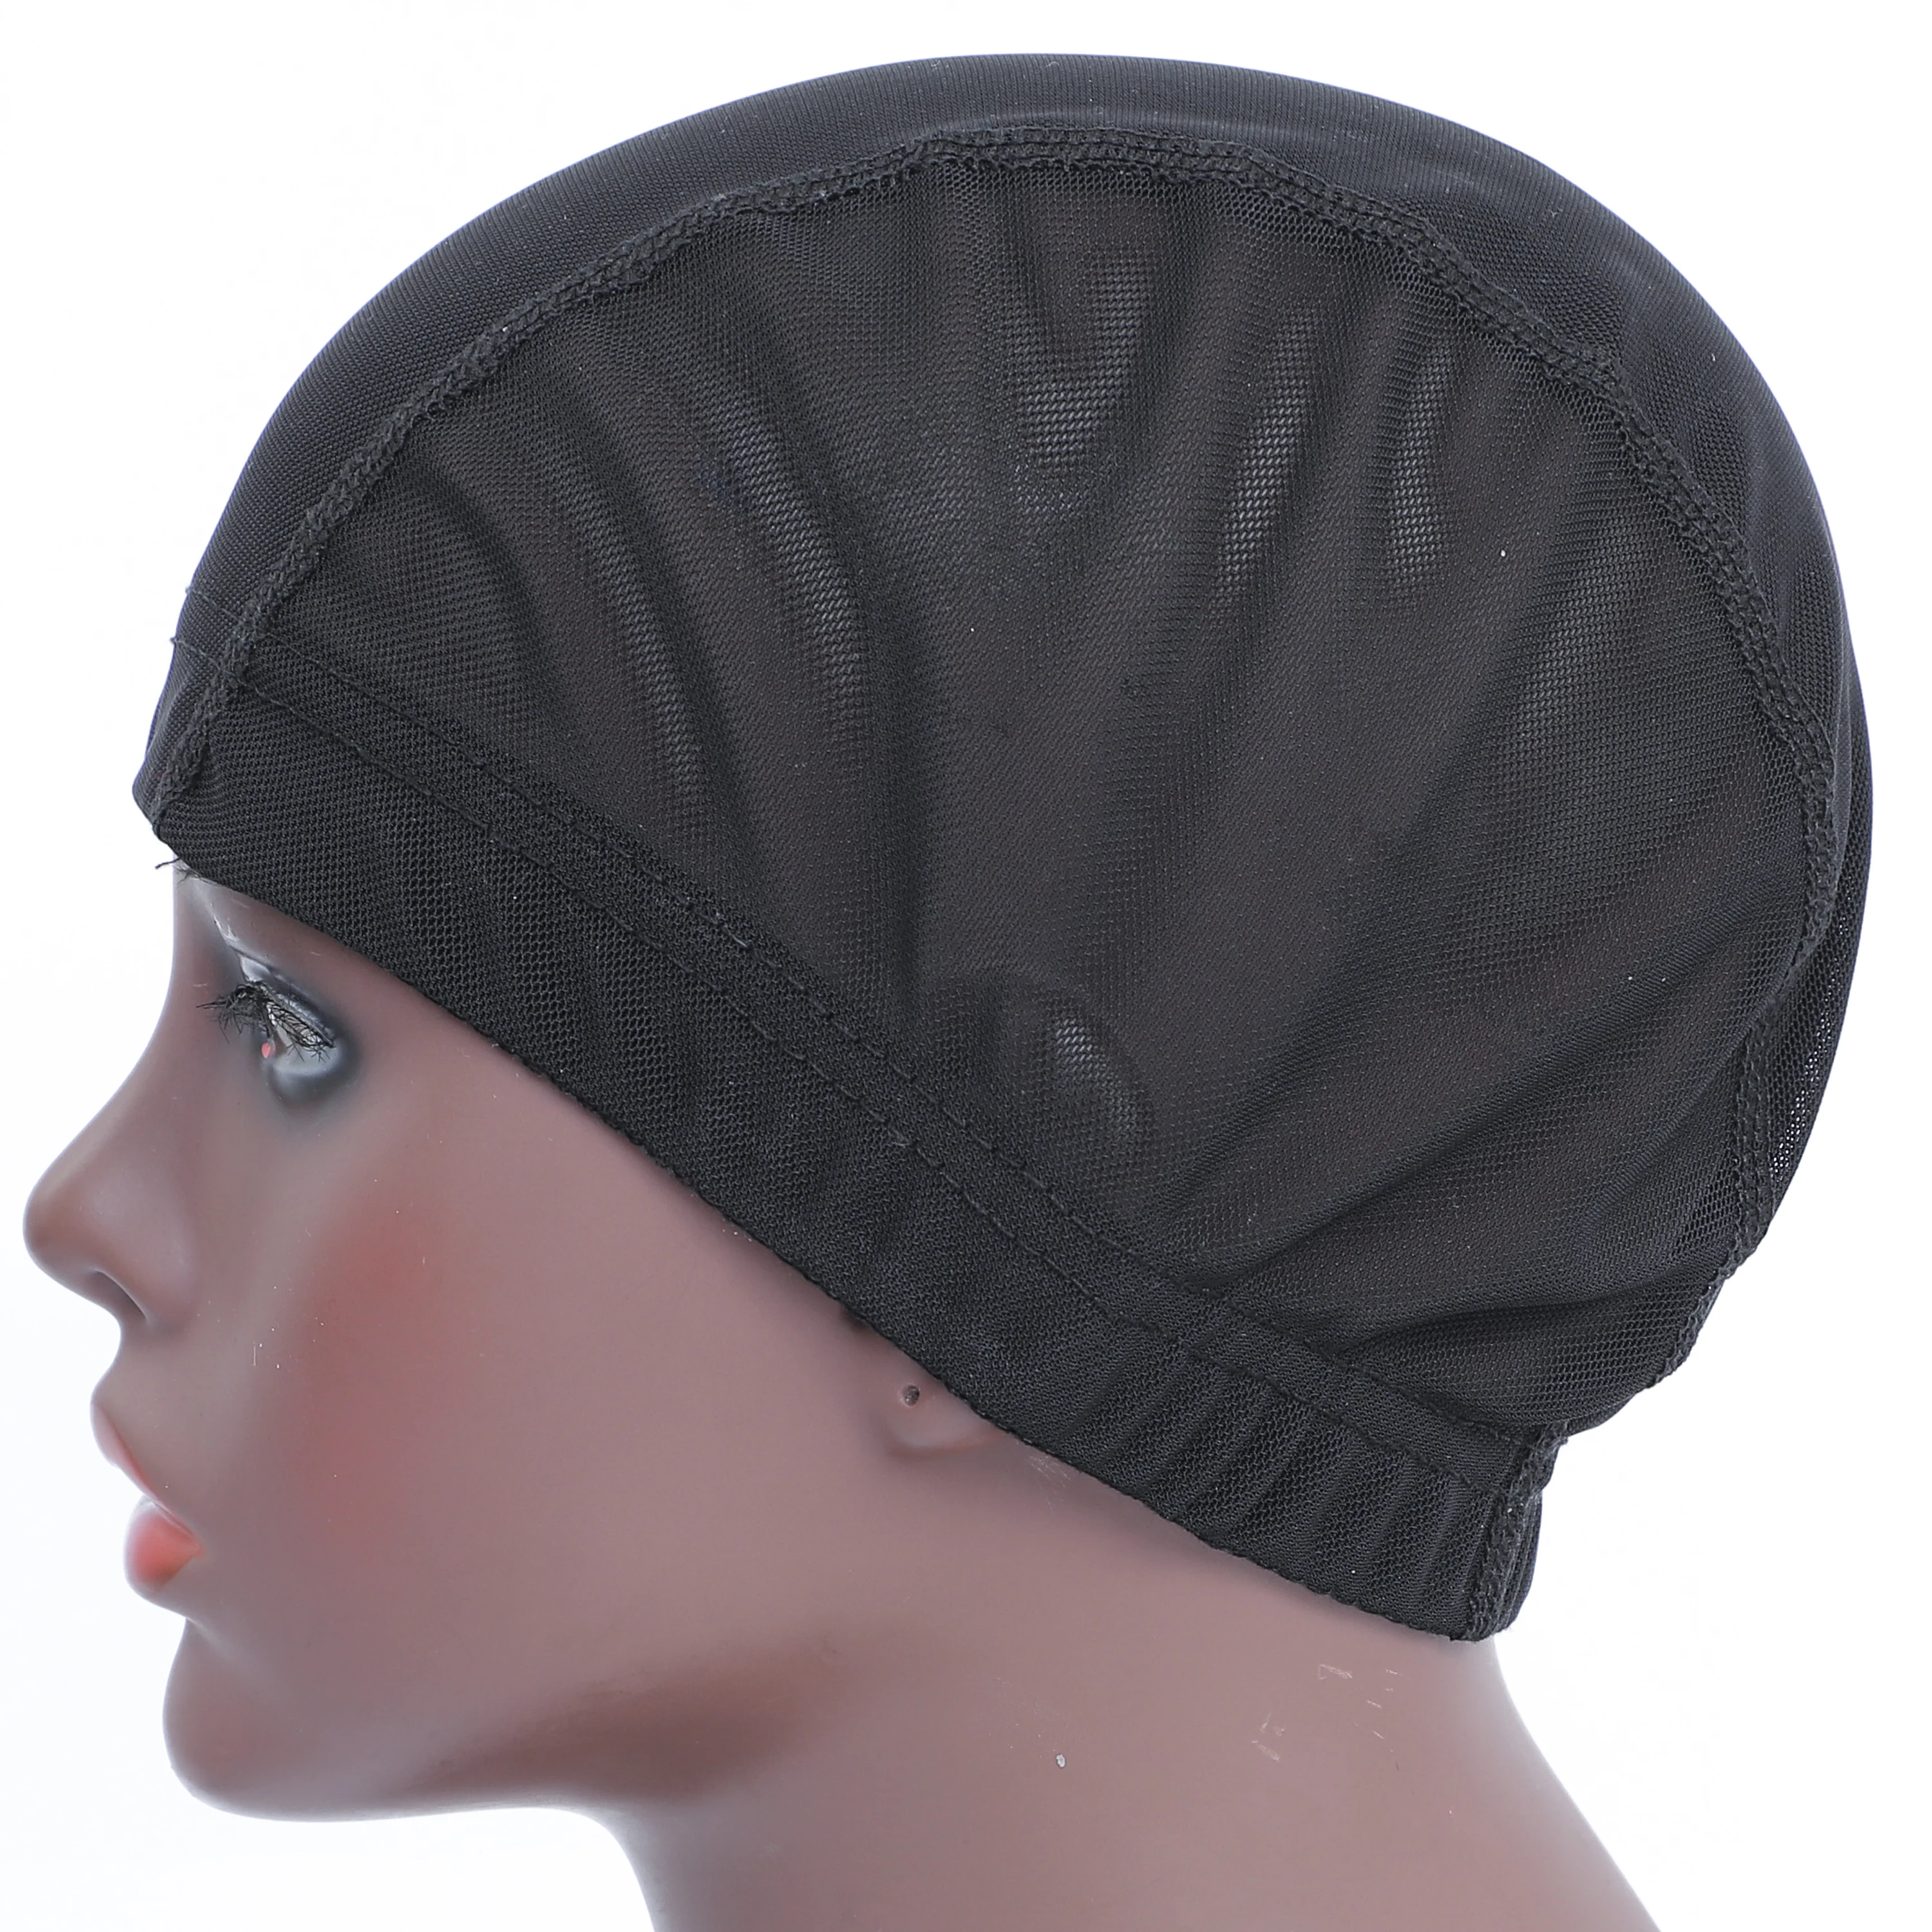 5 Pcs/lot High Quality Spandex Dome Cap For Wig Making Strech Glueless Hair Weave Net Elastic Mesh Dome Cap Pack Black